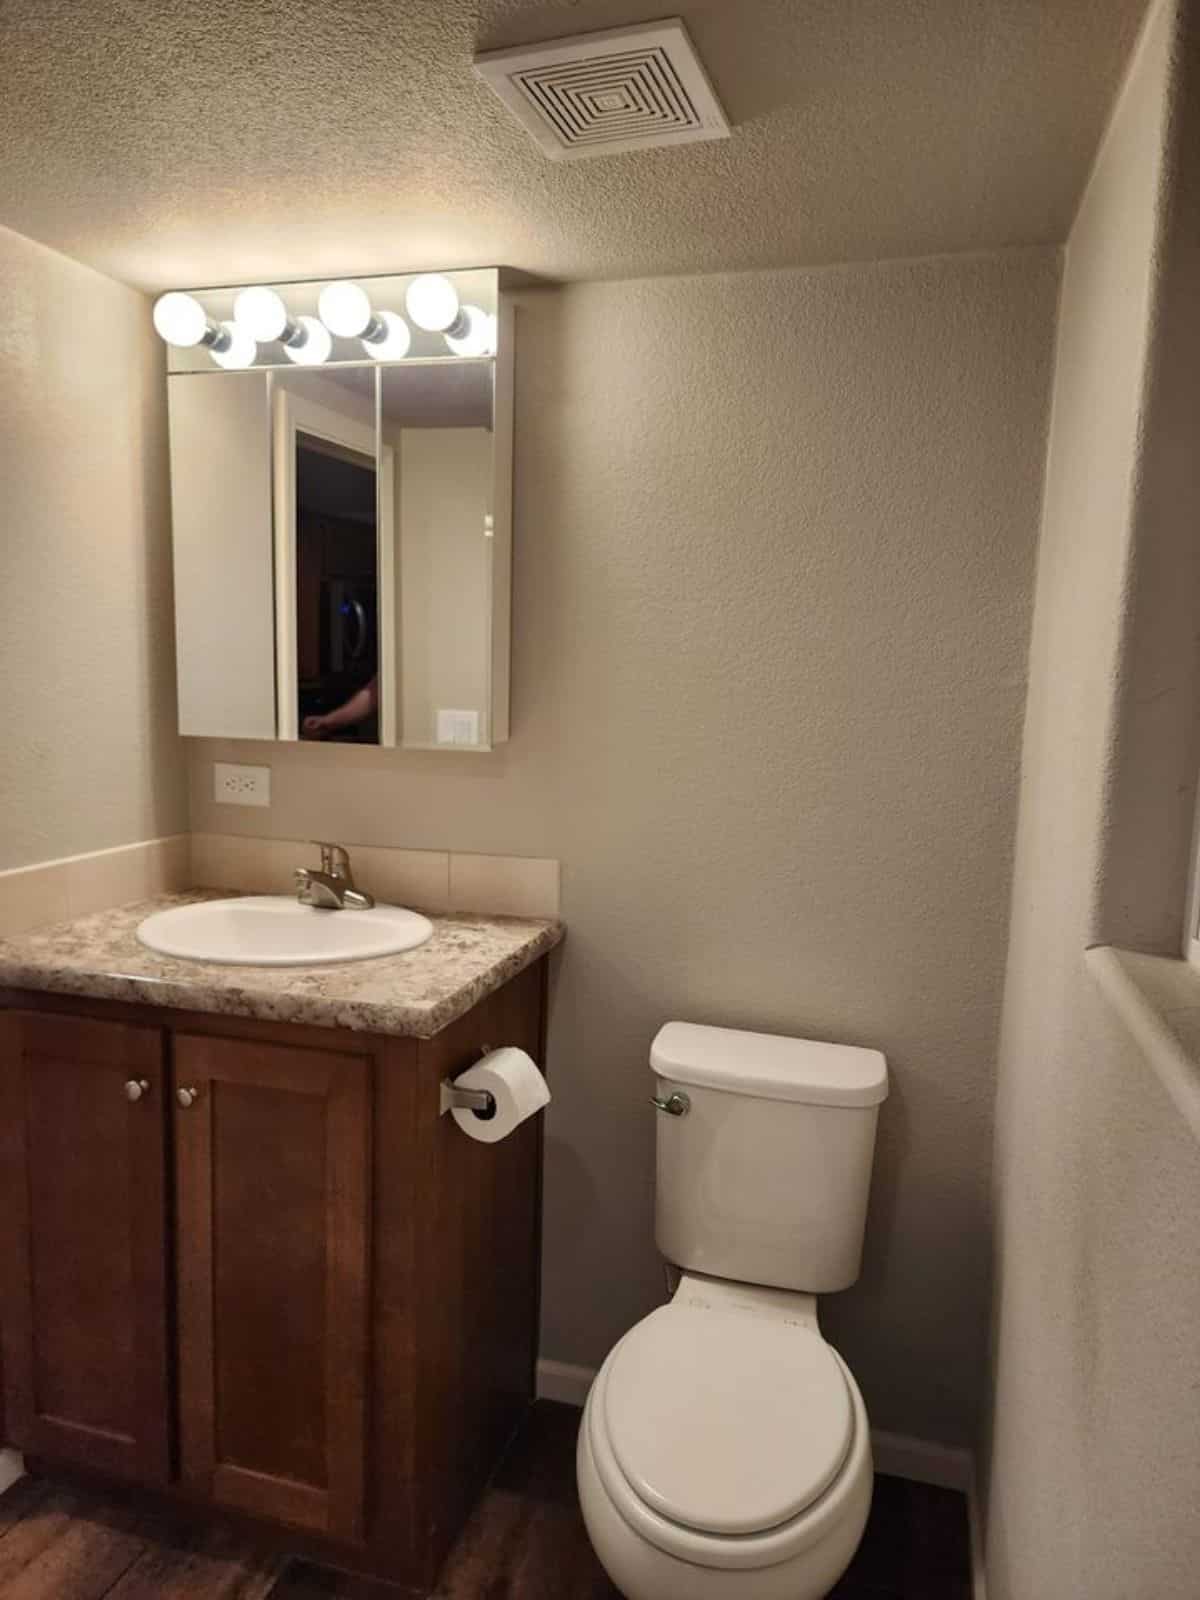 Standard toilet, sink with vanity & mirror in bathroom of Spacious Tiny House